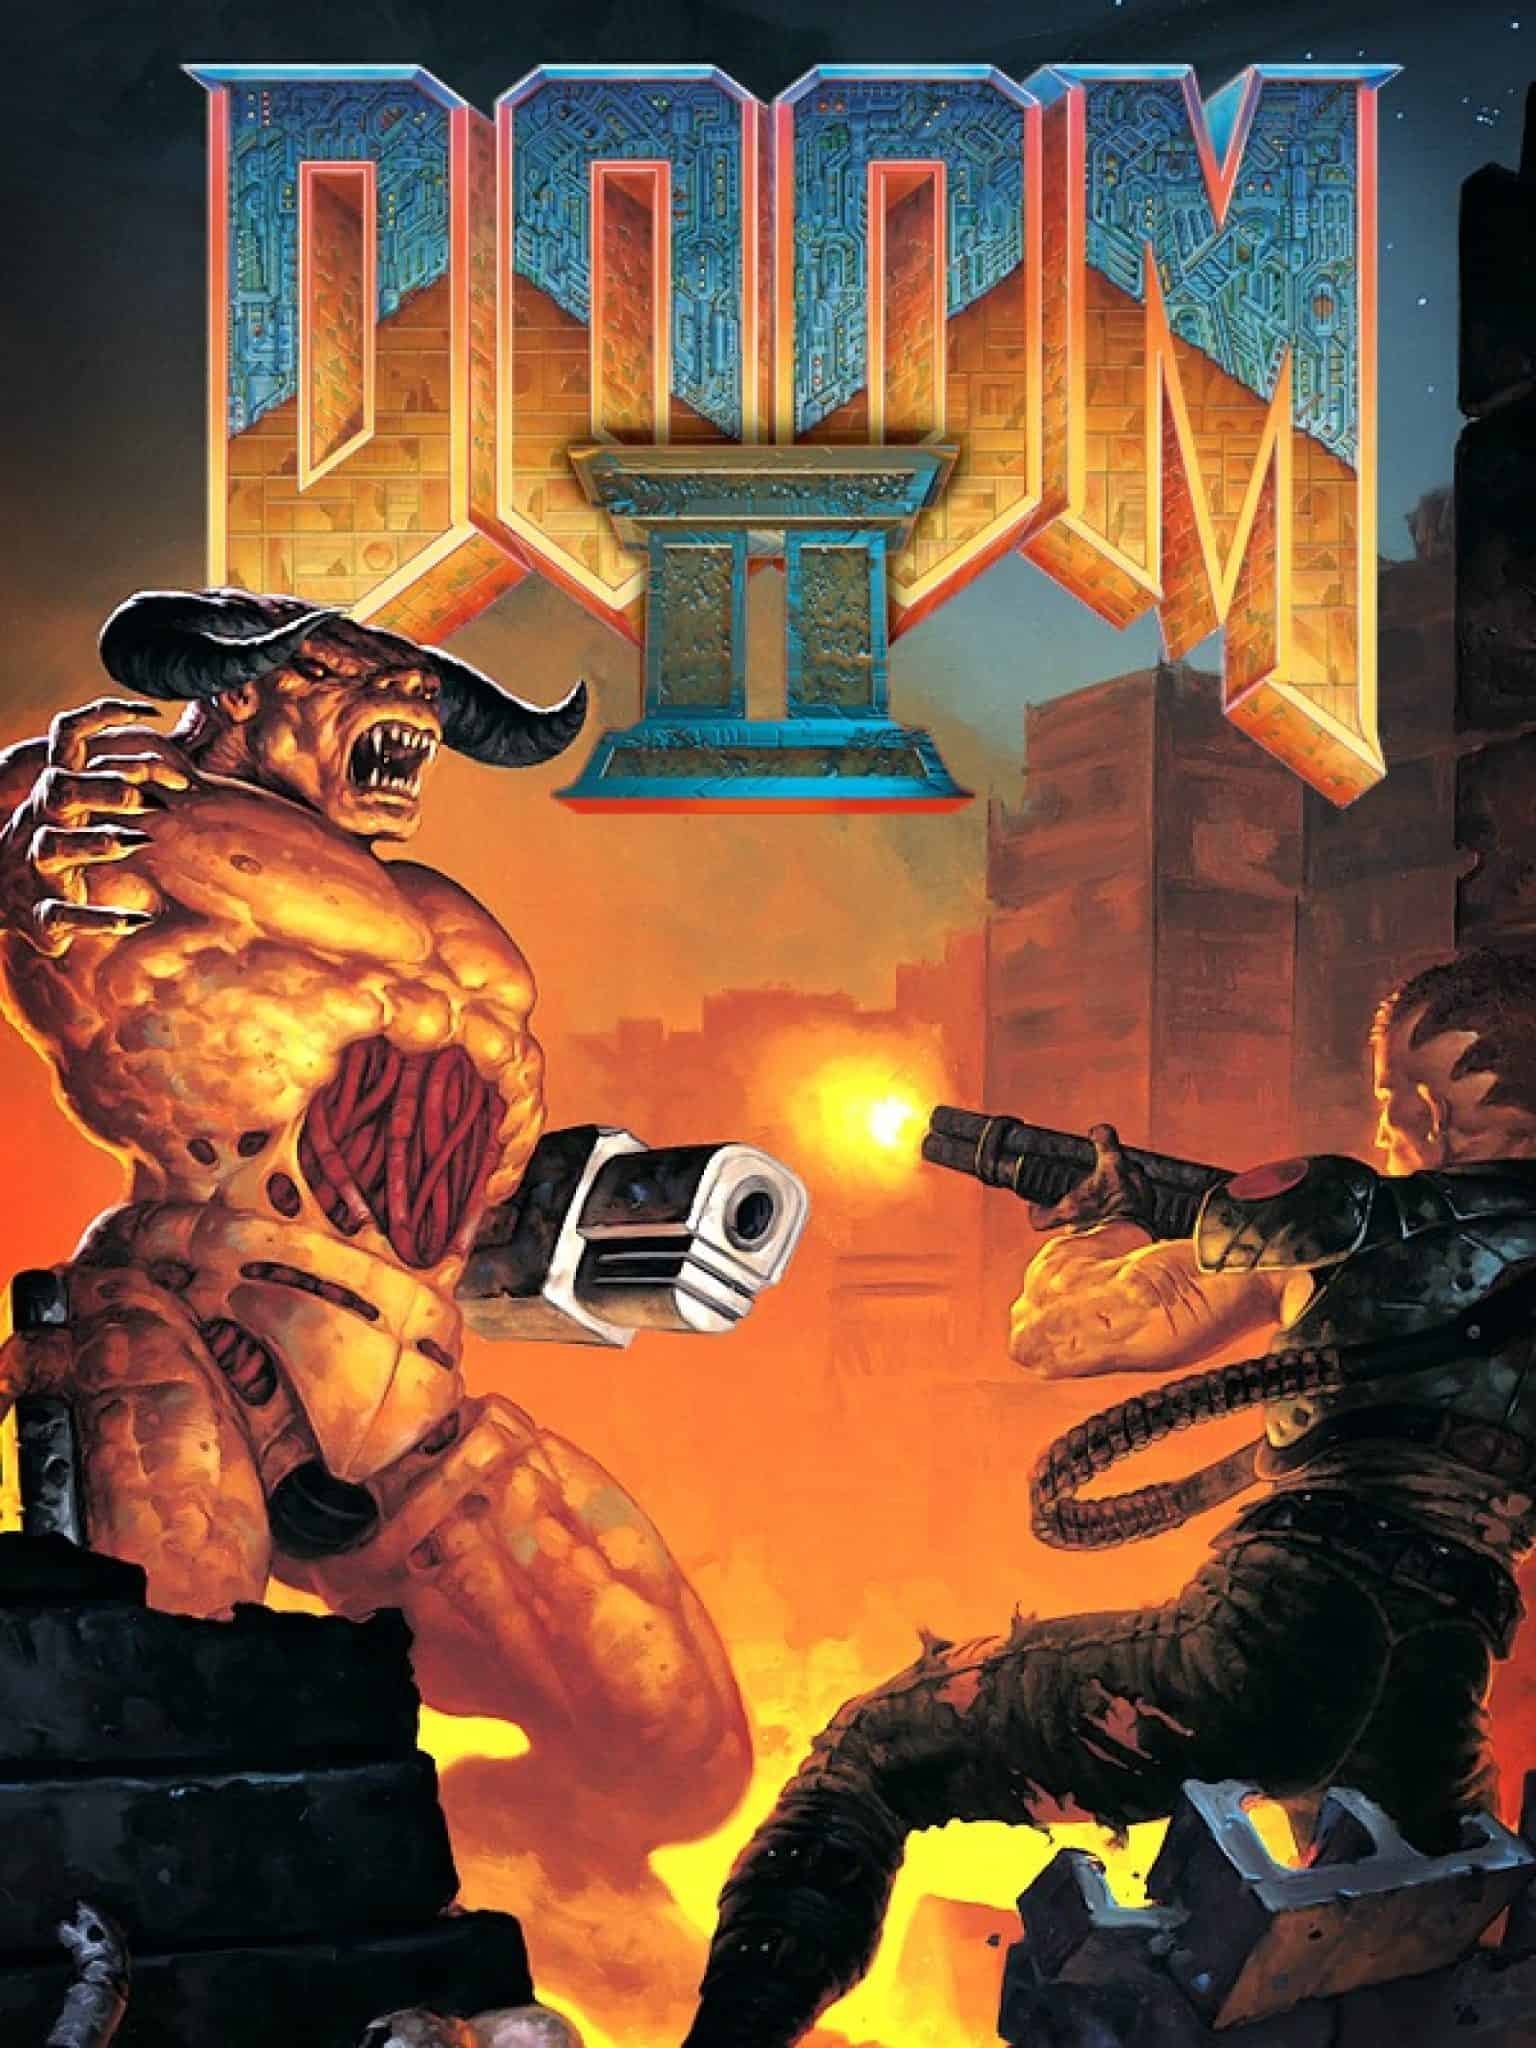 Doom 2 box art